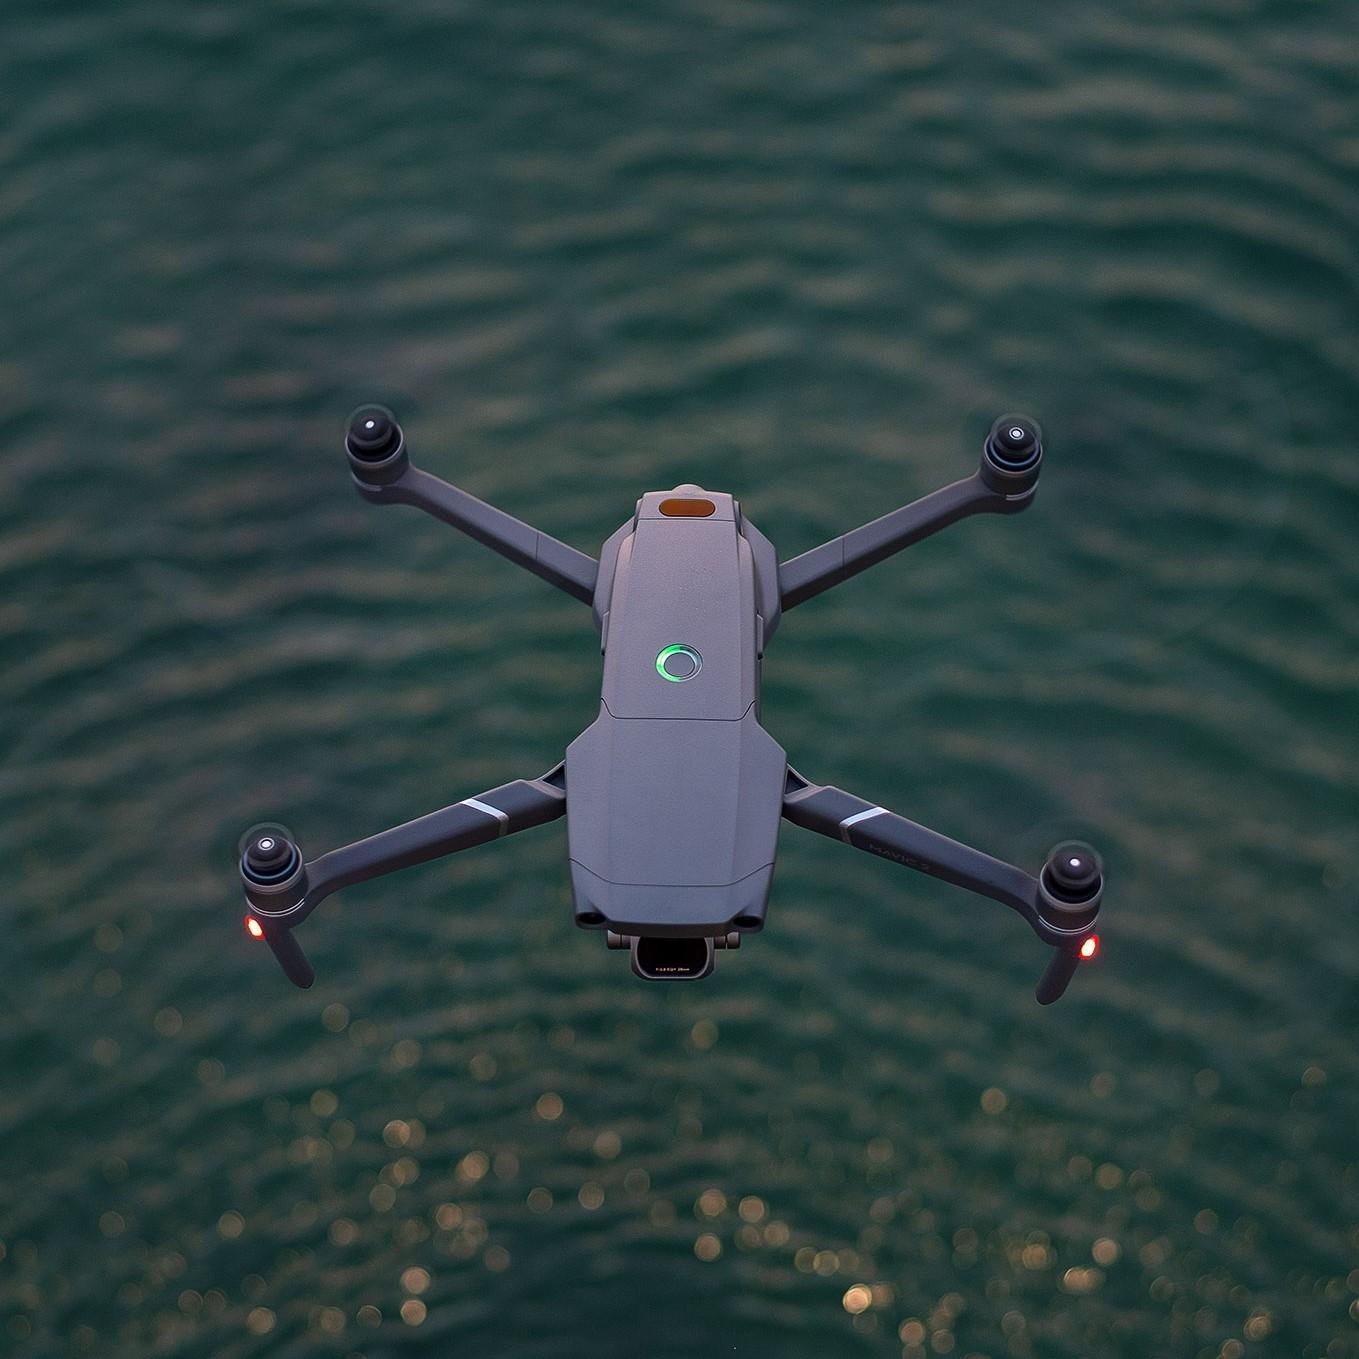 DJI Mavic 2 Pro & Zoom Review: elevating drone photography